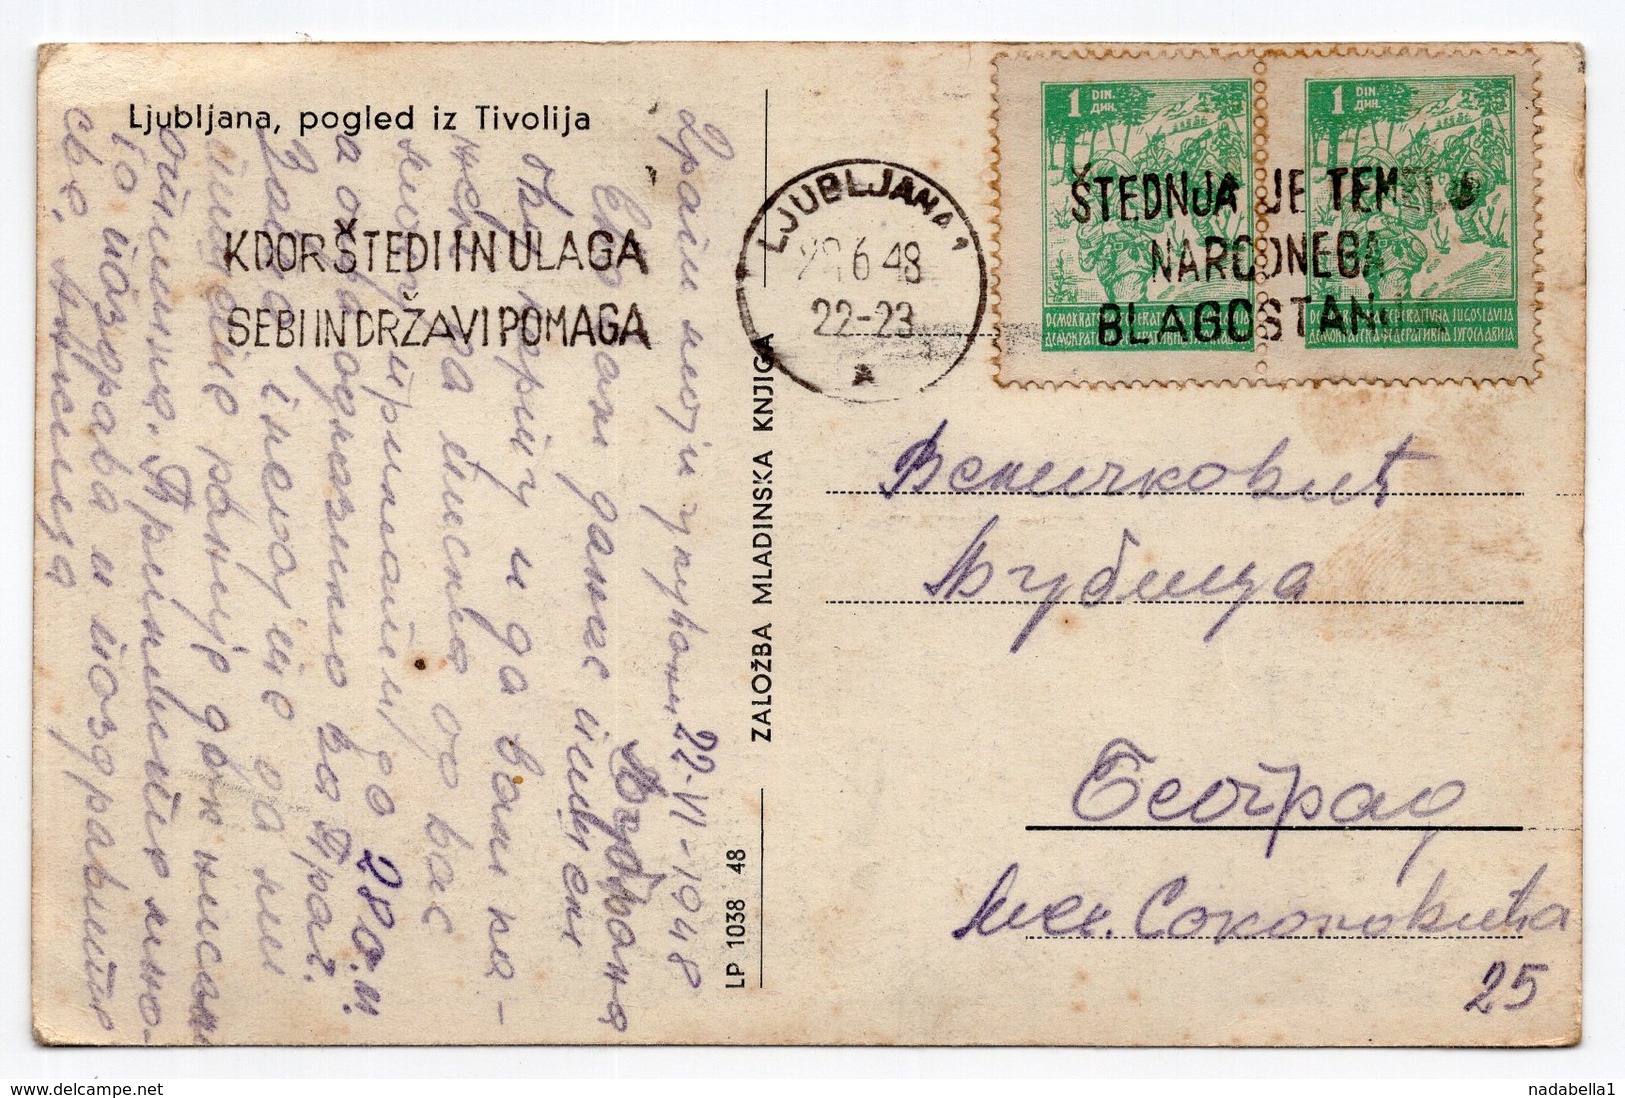 1948 YUGOSLAVIA, SLOVENIA, LJUBLJANA, VIEW FROM TIVOLI, DOUBLE  FLAM, ILLUSTRATED POSTCARD USED - Yugoslavia